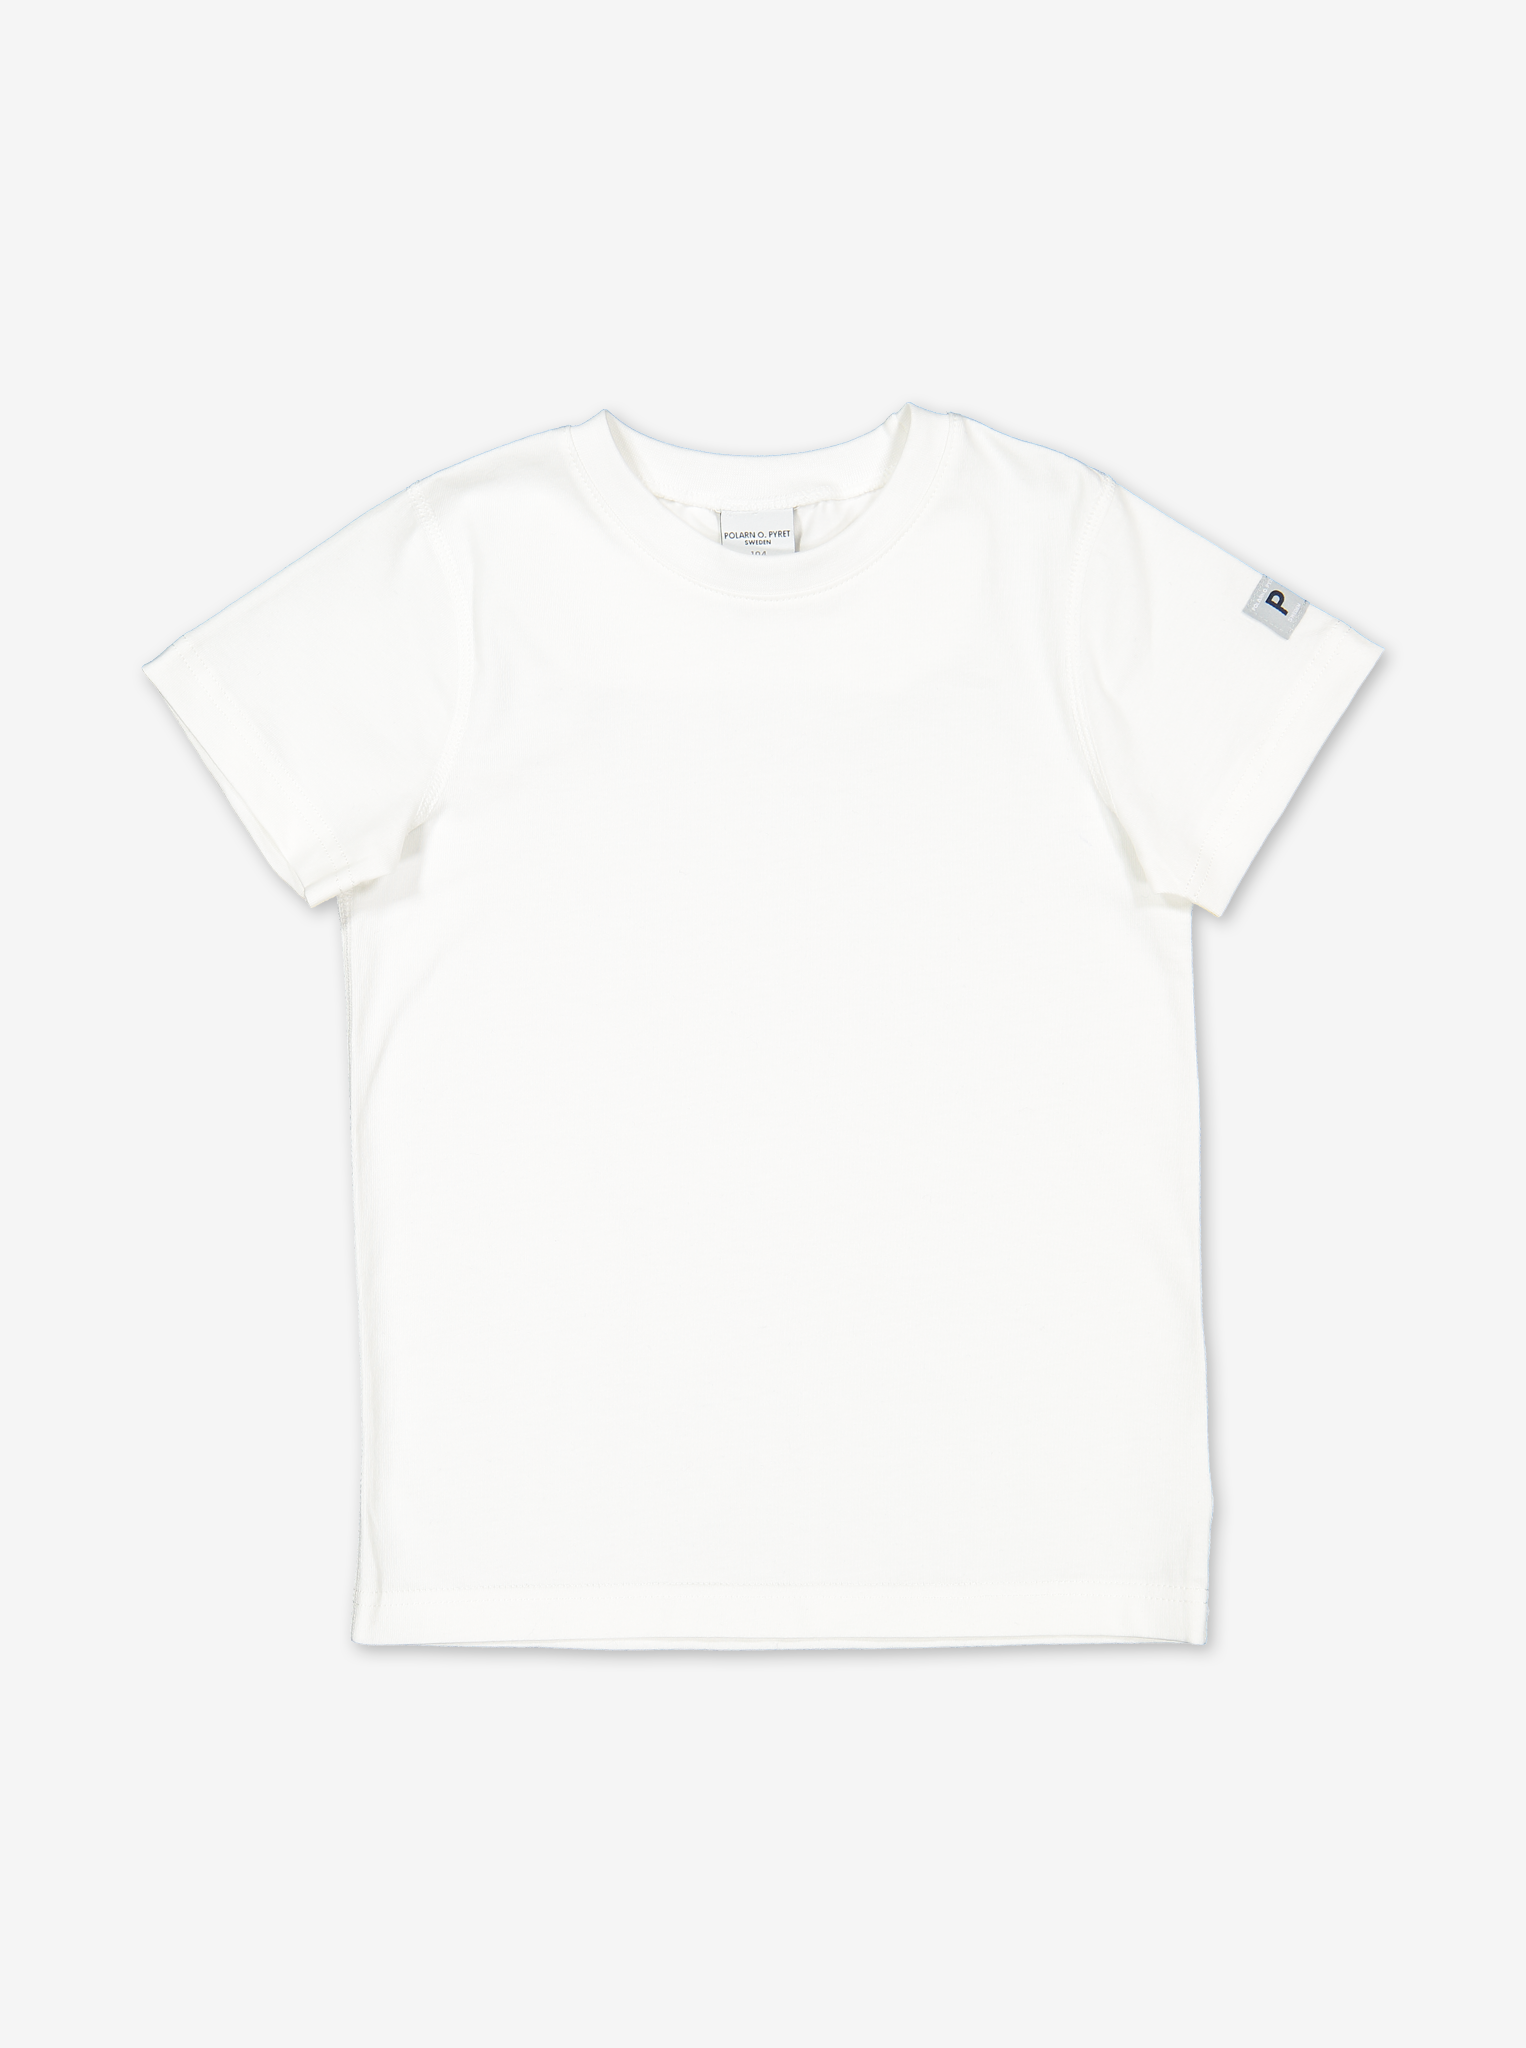 white classic kids t-shirt, ethical organic cotton, polarn o. pyret quality, long lasting